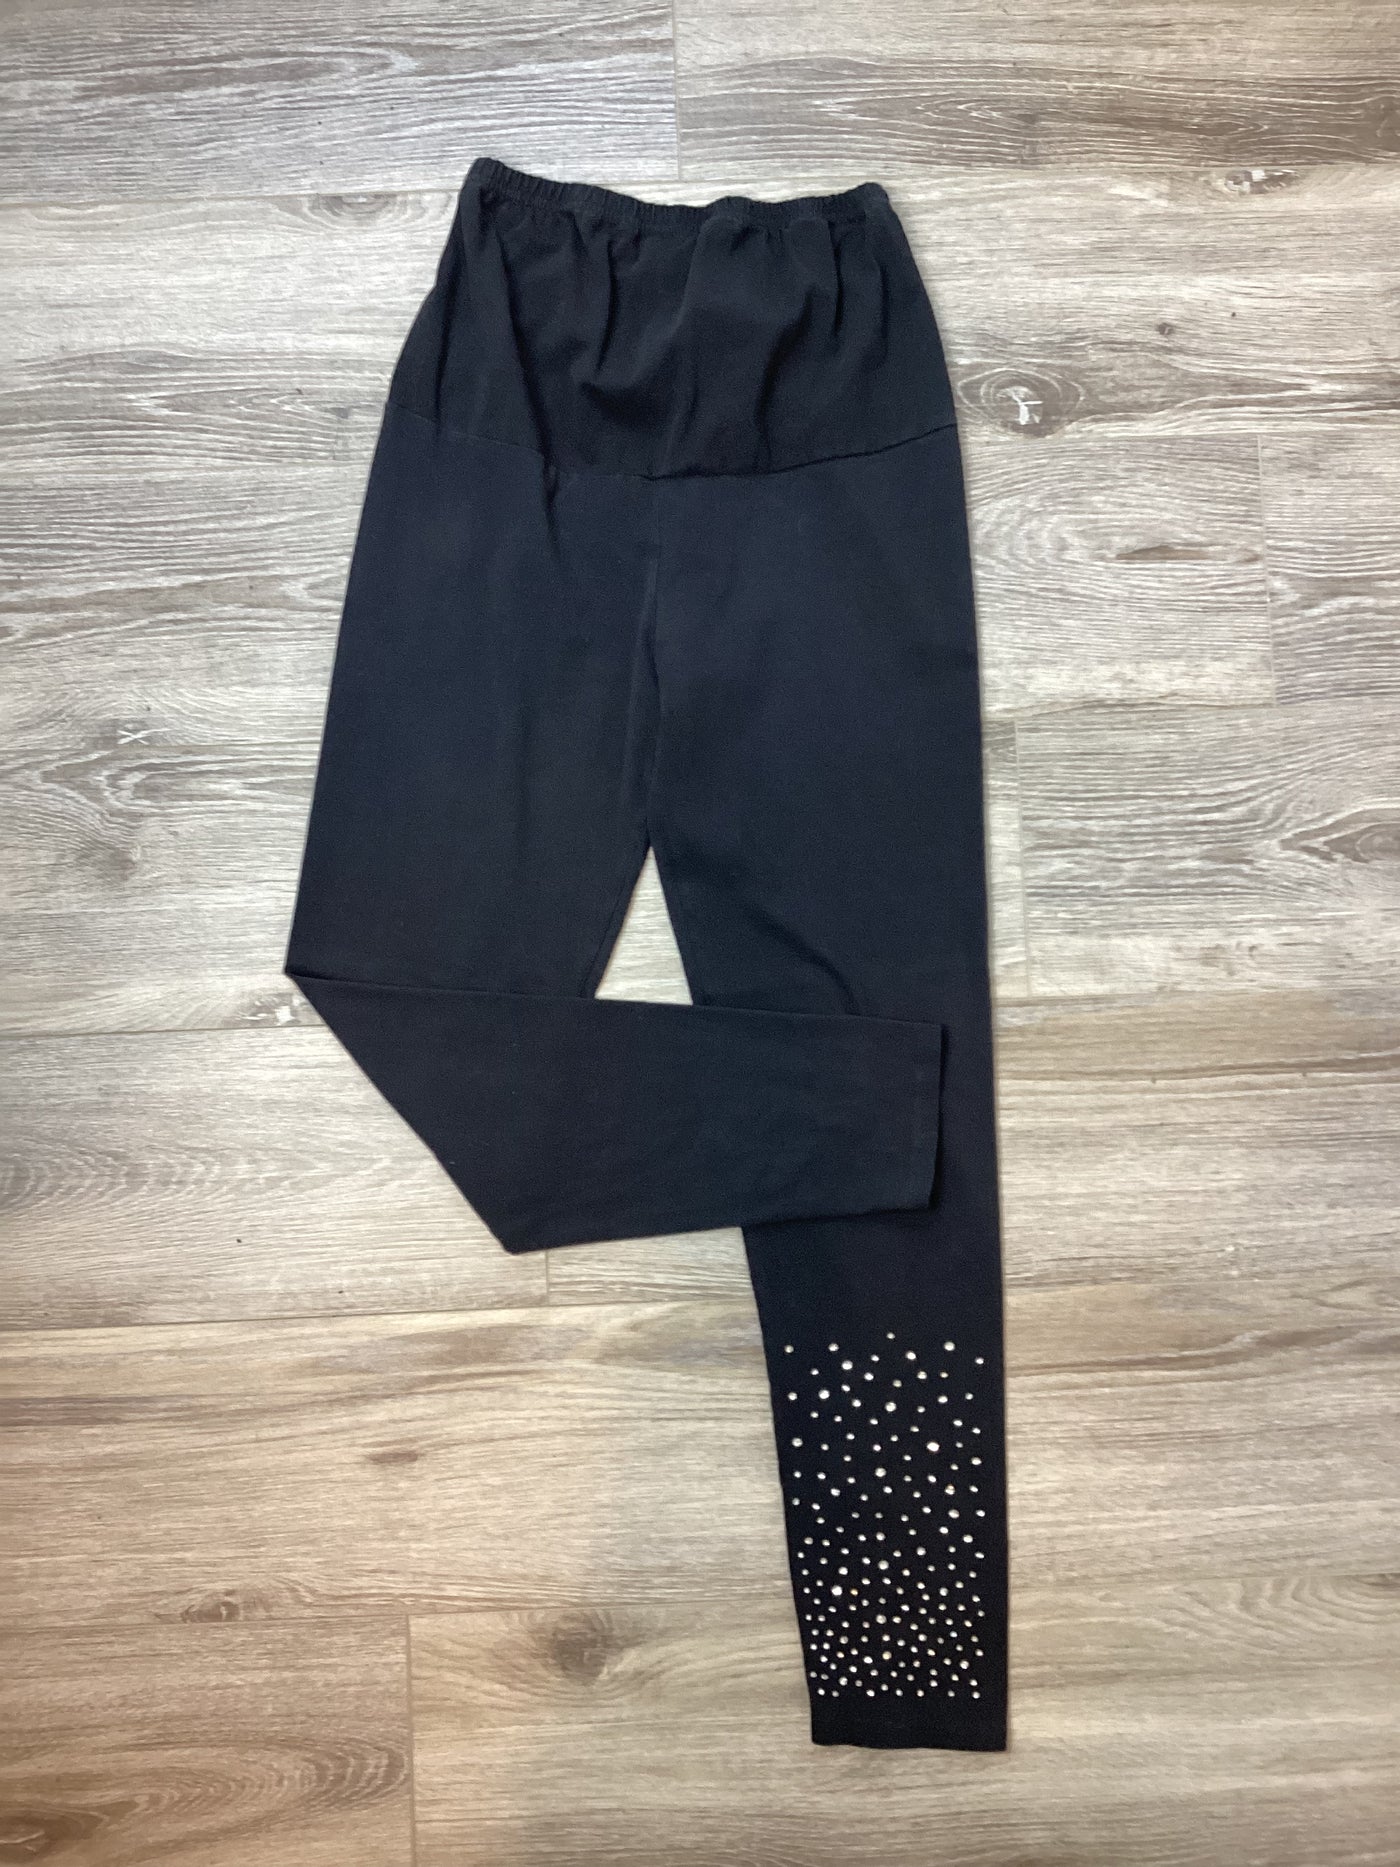 HappyMama black overbump ankle grazer leggings with diamante detail - Size L (would fit UK 10)